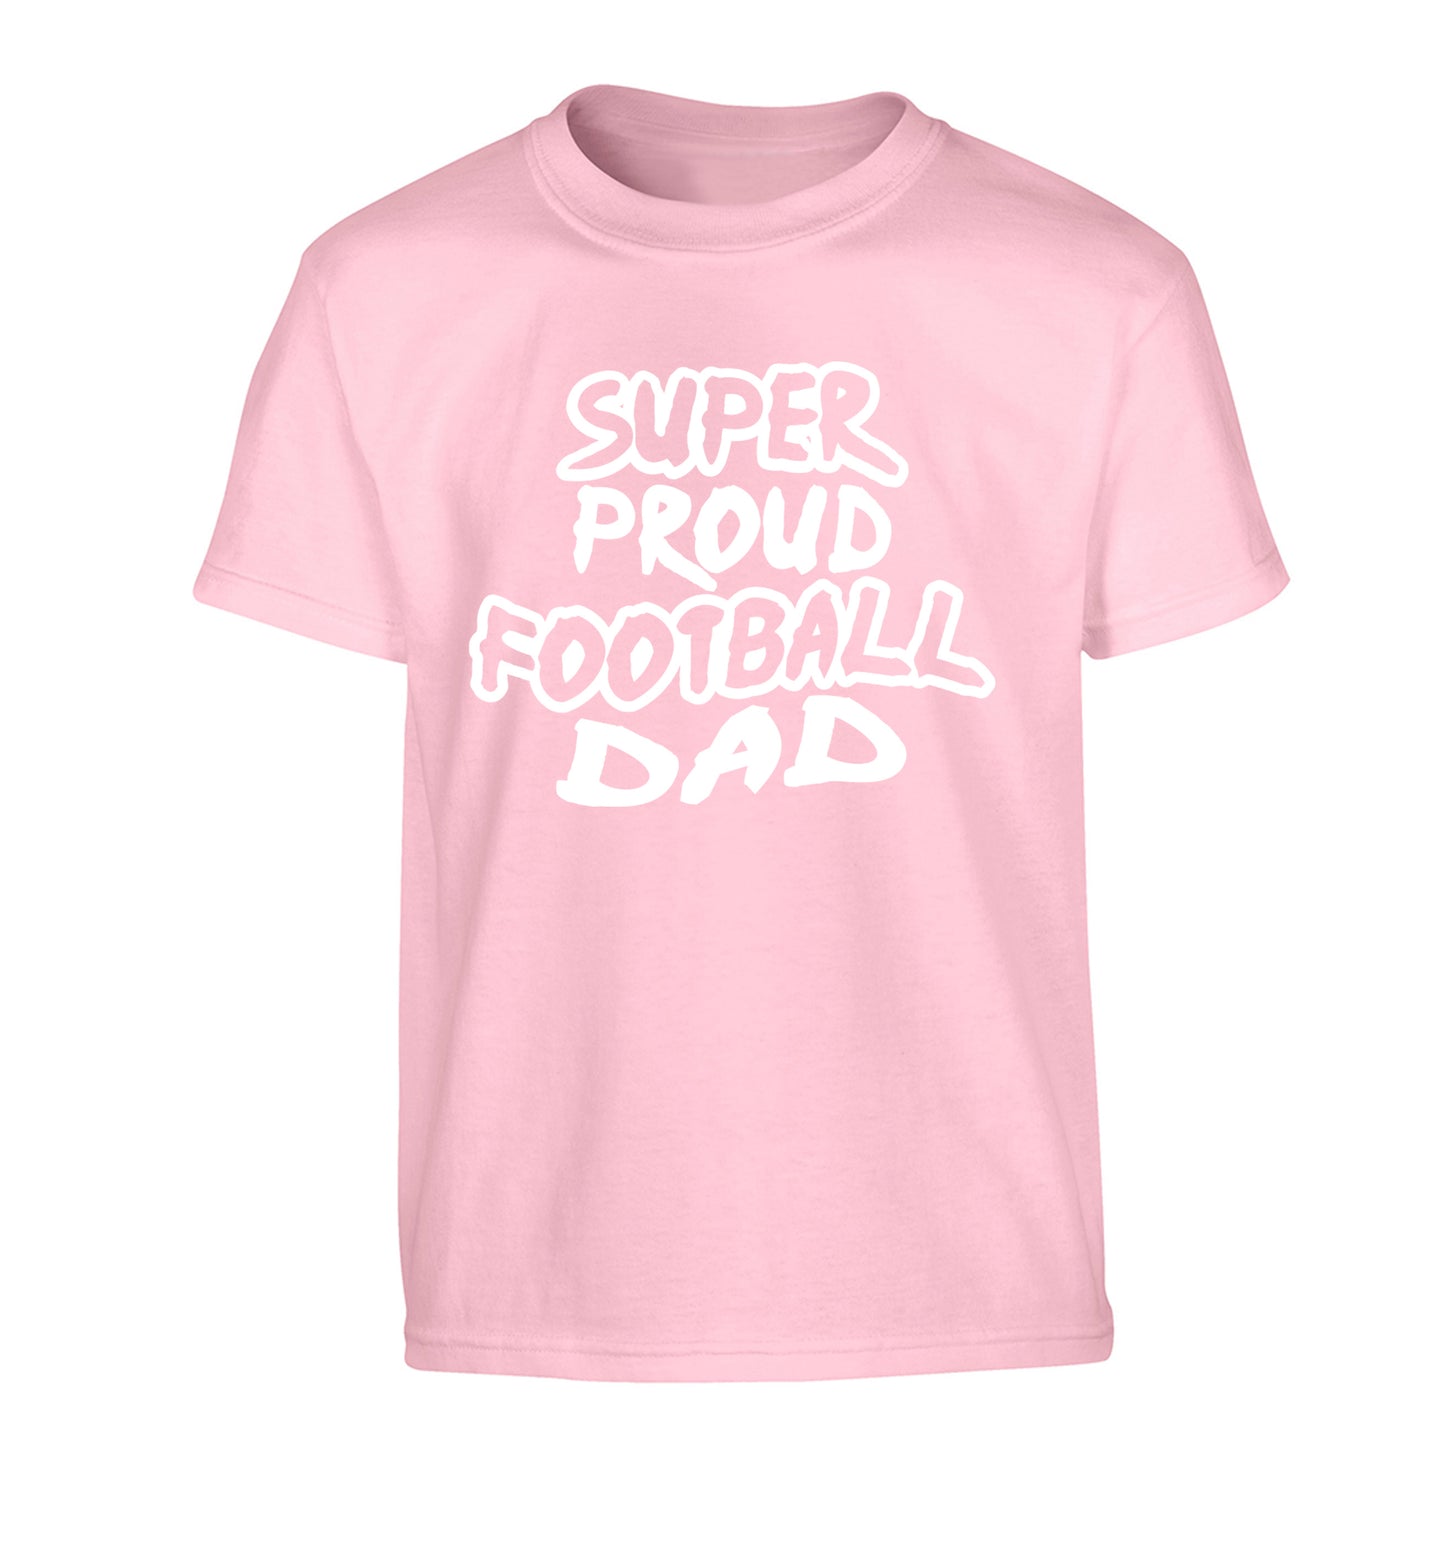 Super proud football dad Children's light pink Tshirt 12-14 Years